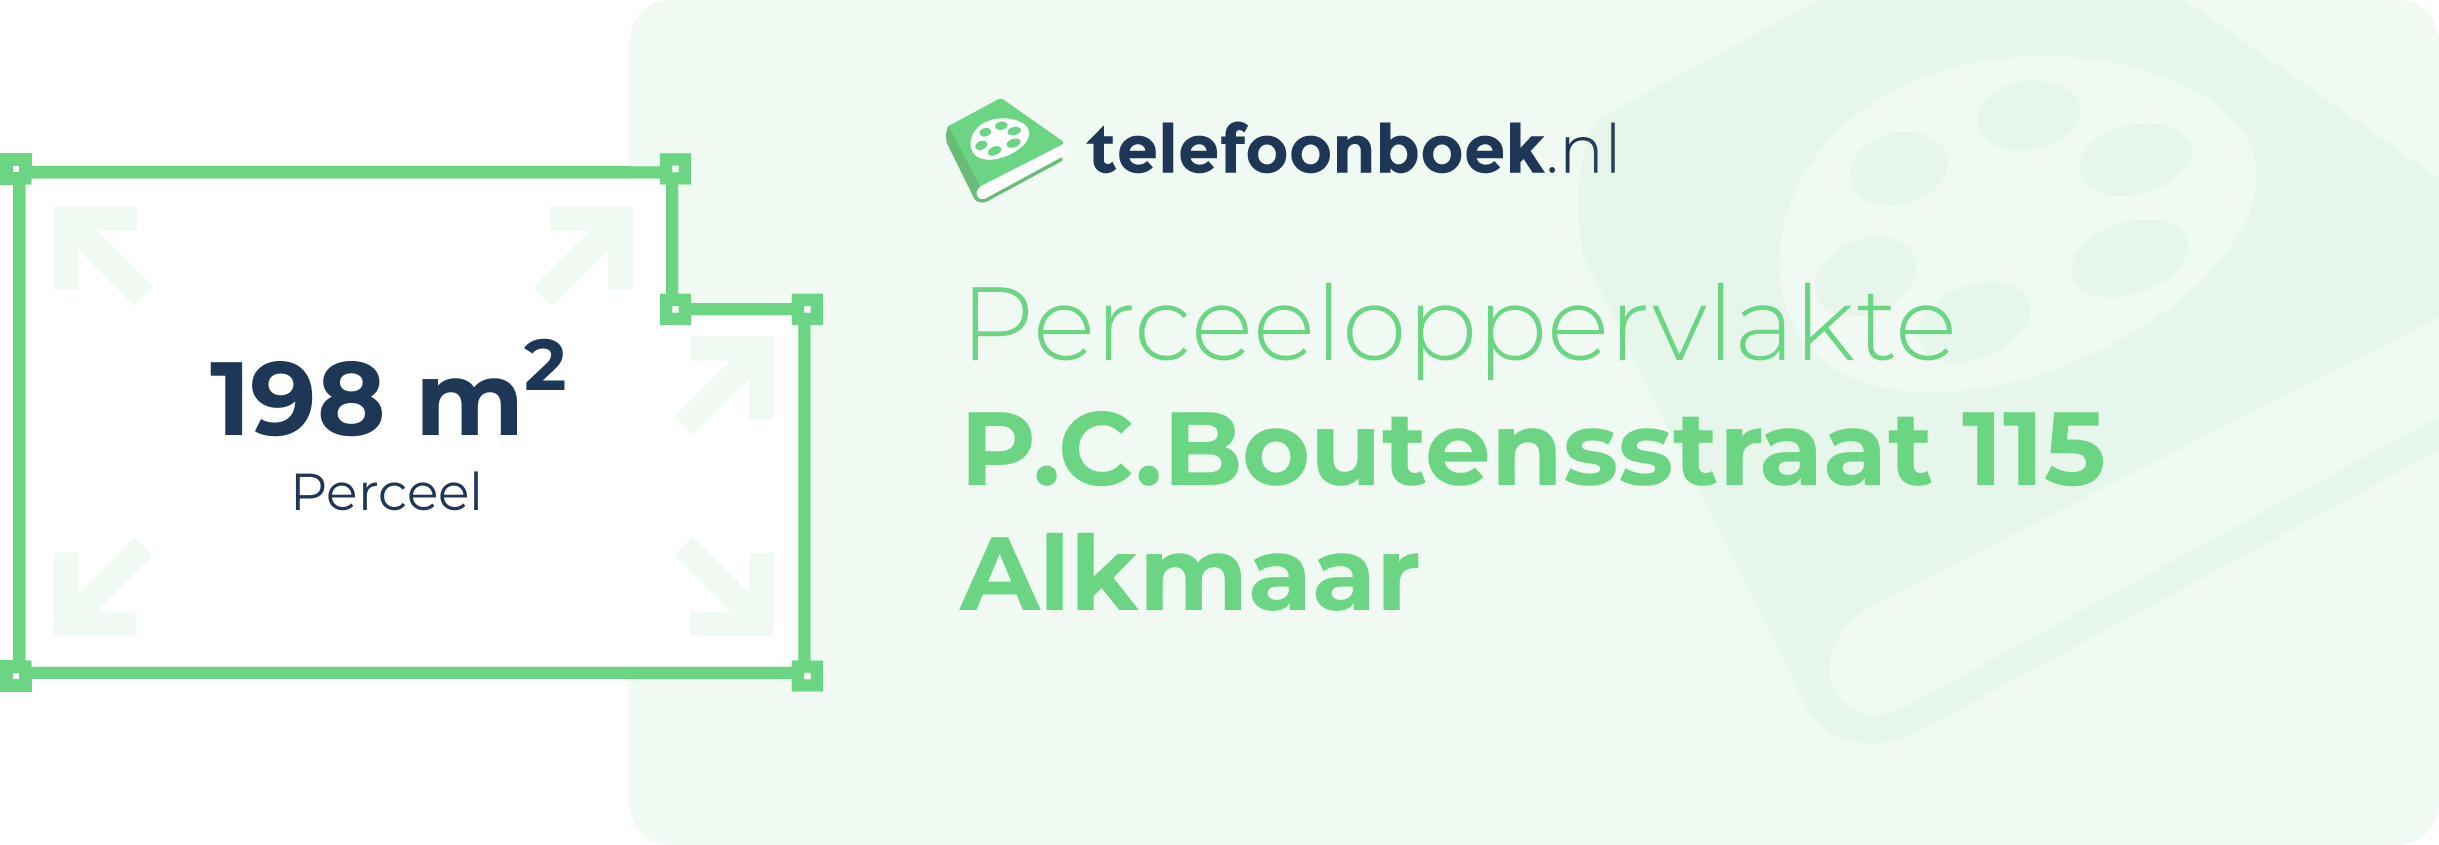 Perceeloppervlakte P.C.Boutensstraat 115 Alkmaar